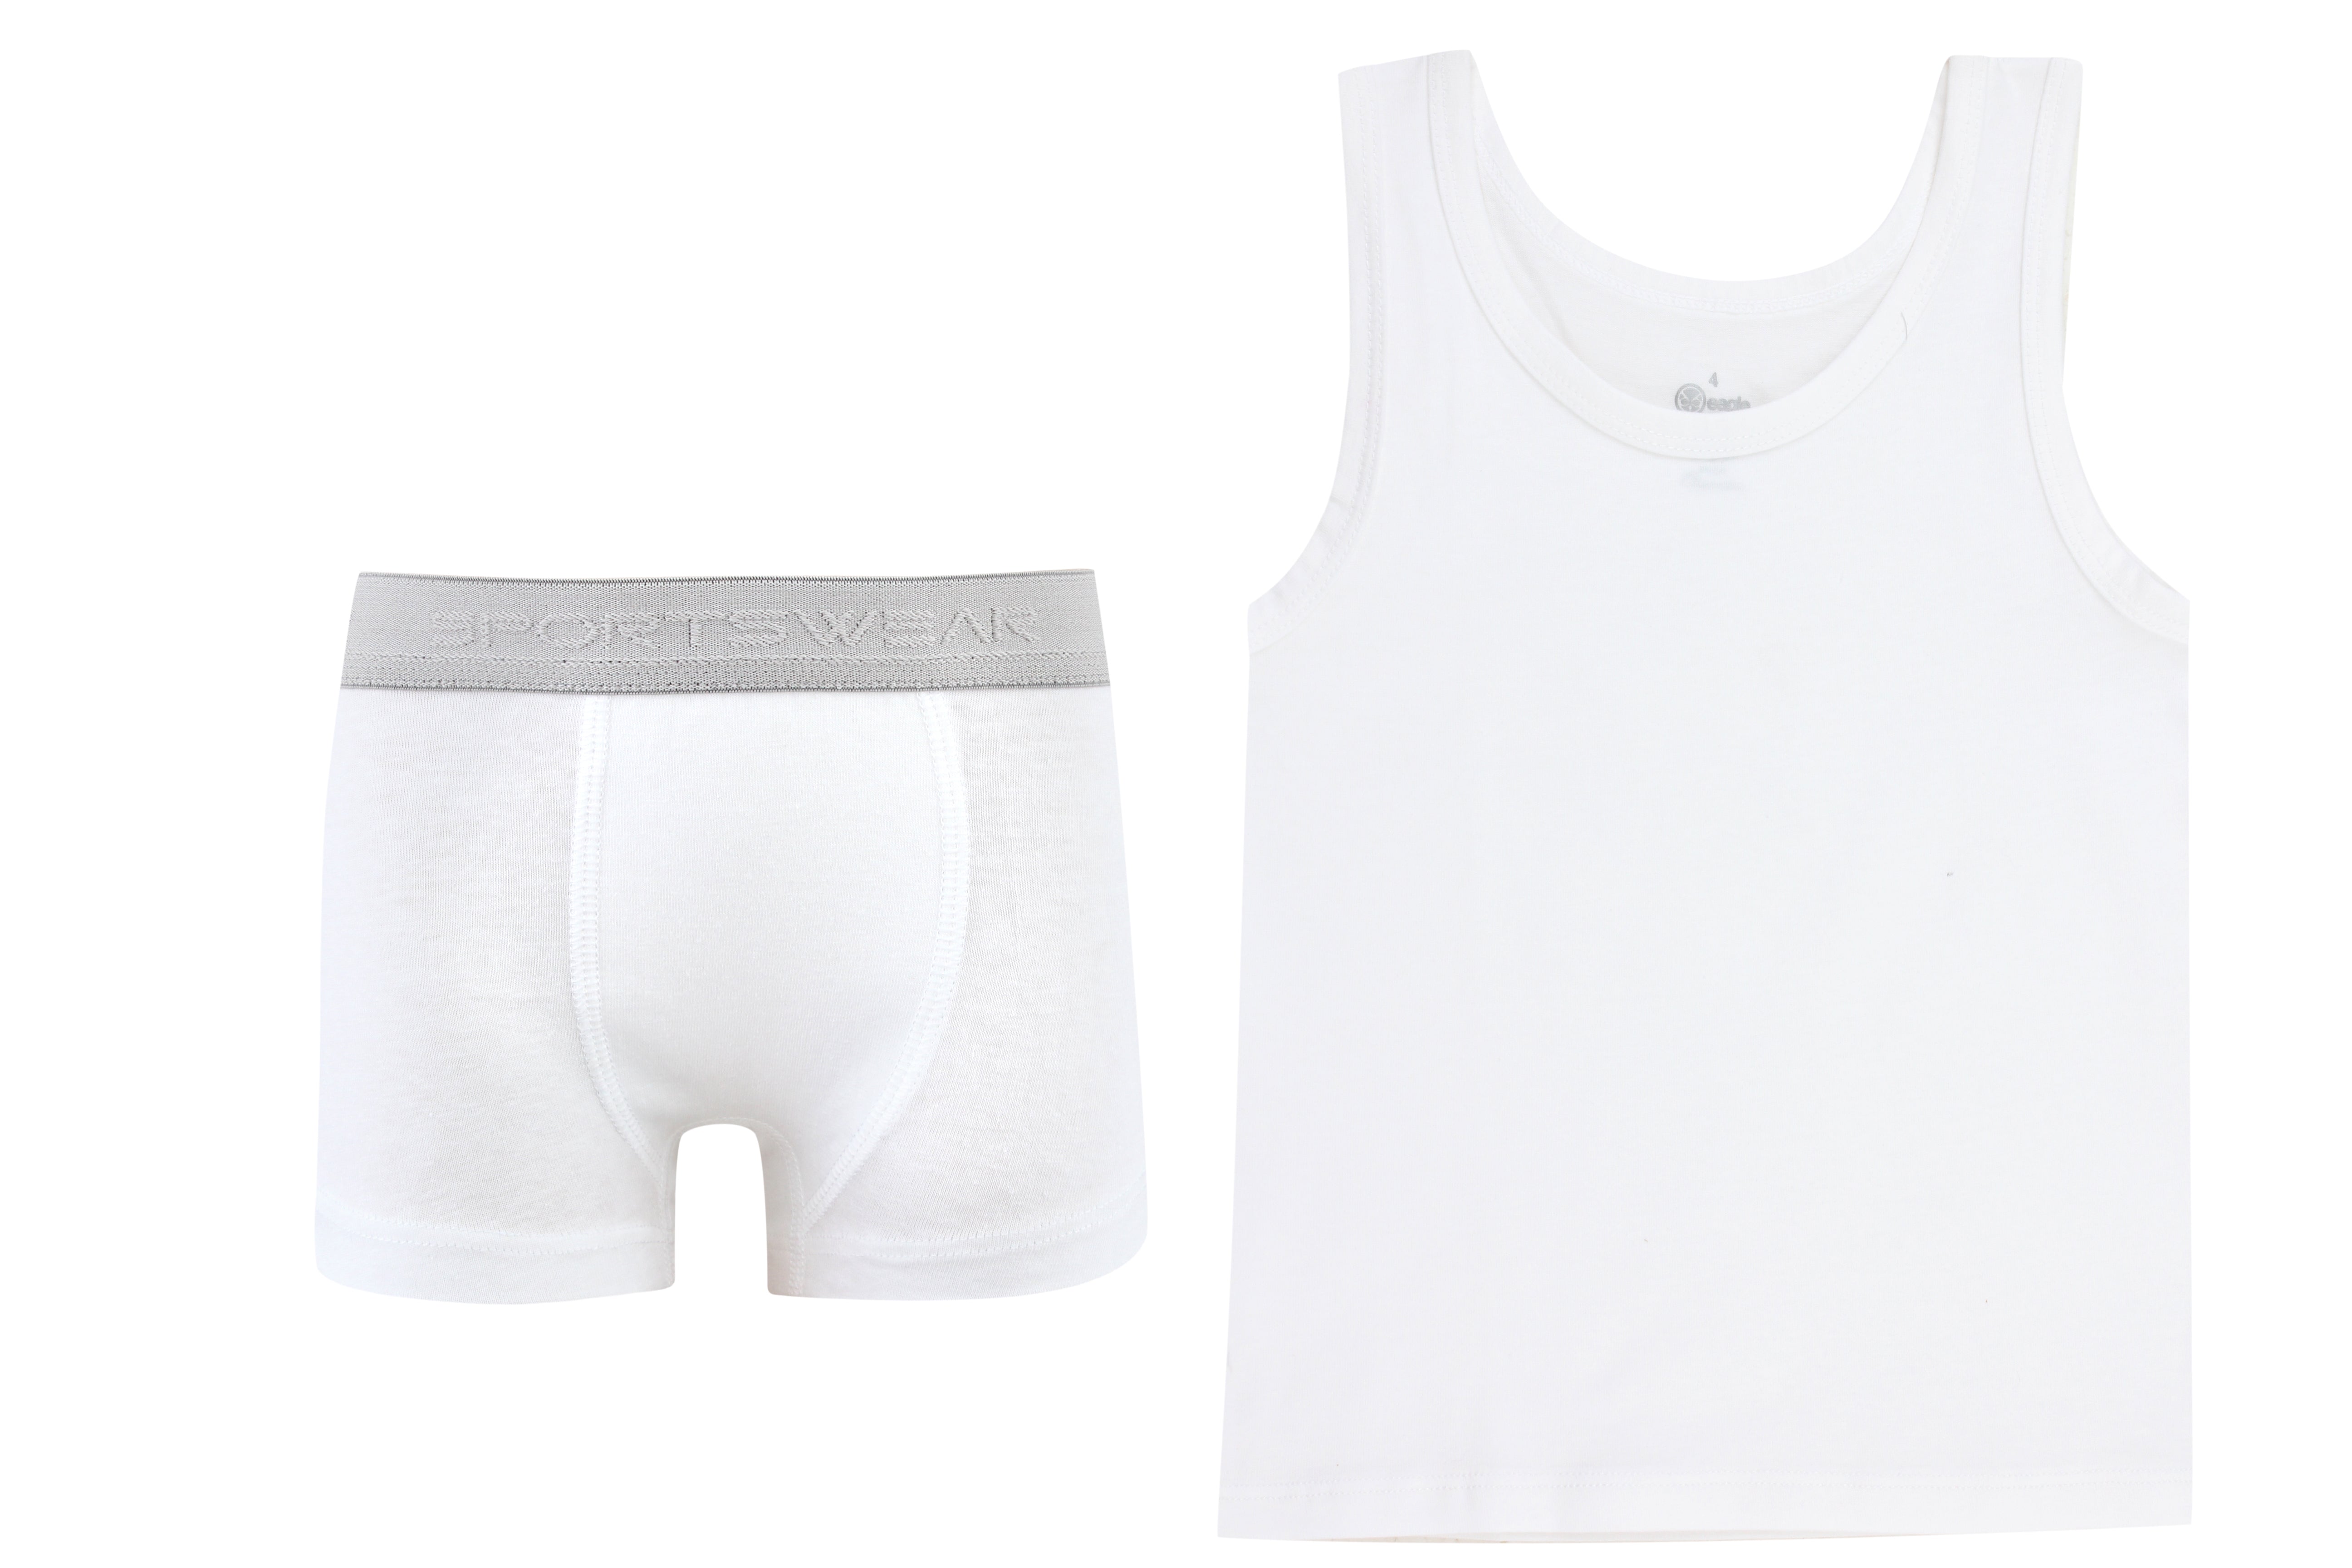 Boy's Sleeveless Undershirt Tank Top and Boxer Underwear Set